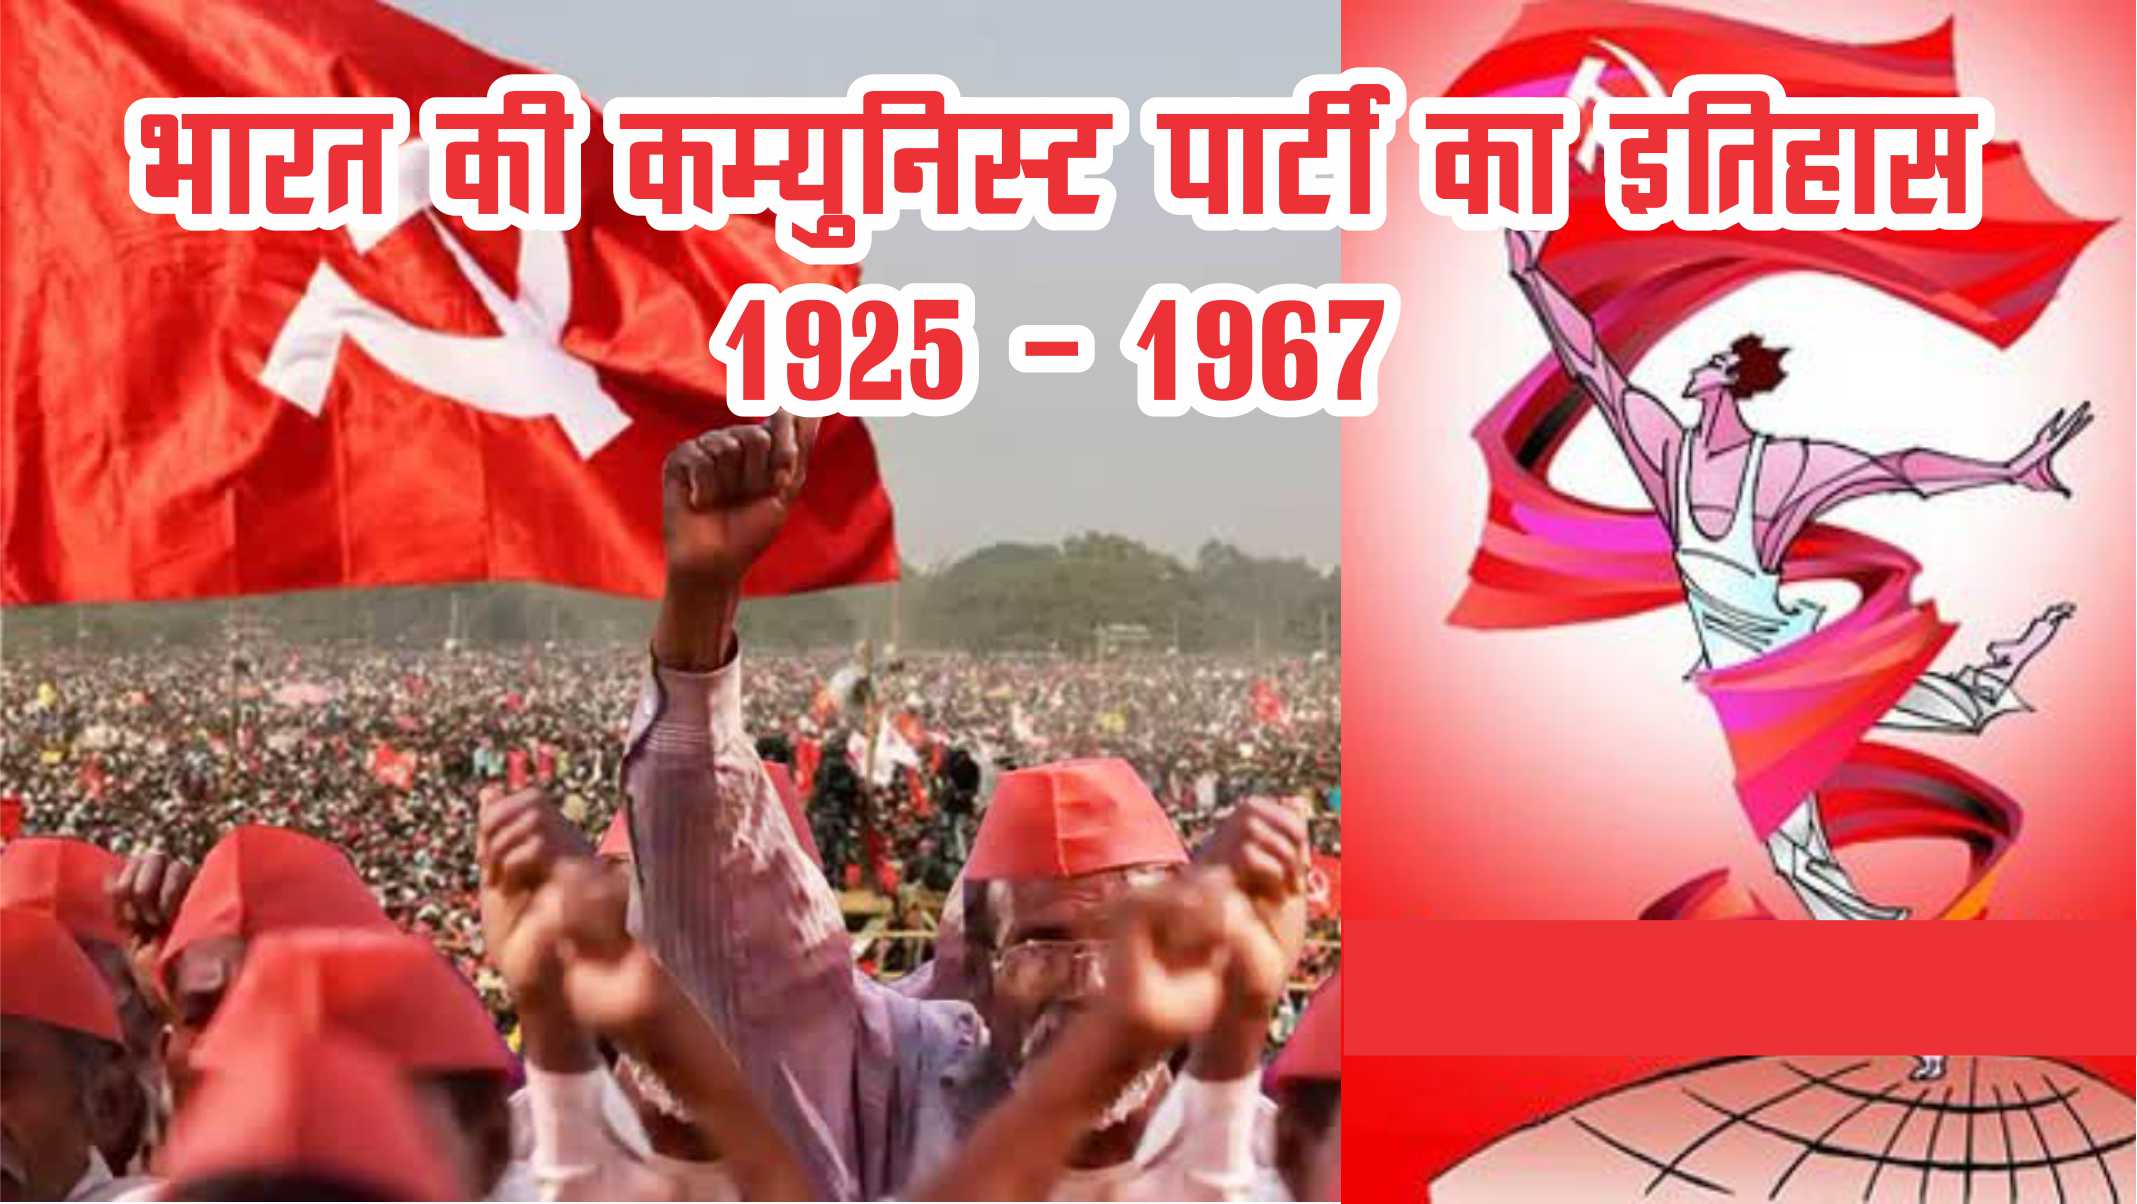 भारत की कम्युनिस्ट पार्टी का इतिहास, 1925-1967